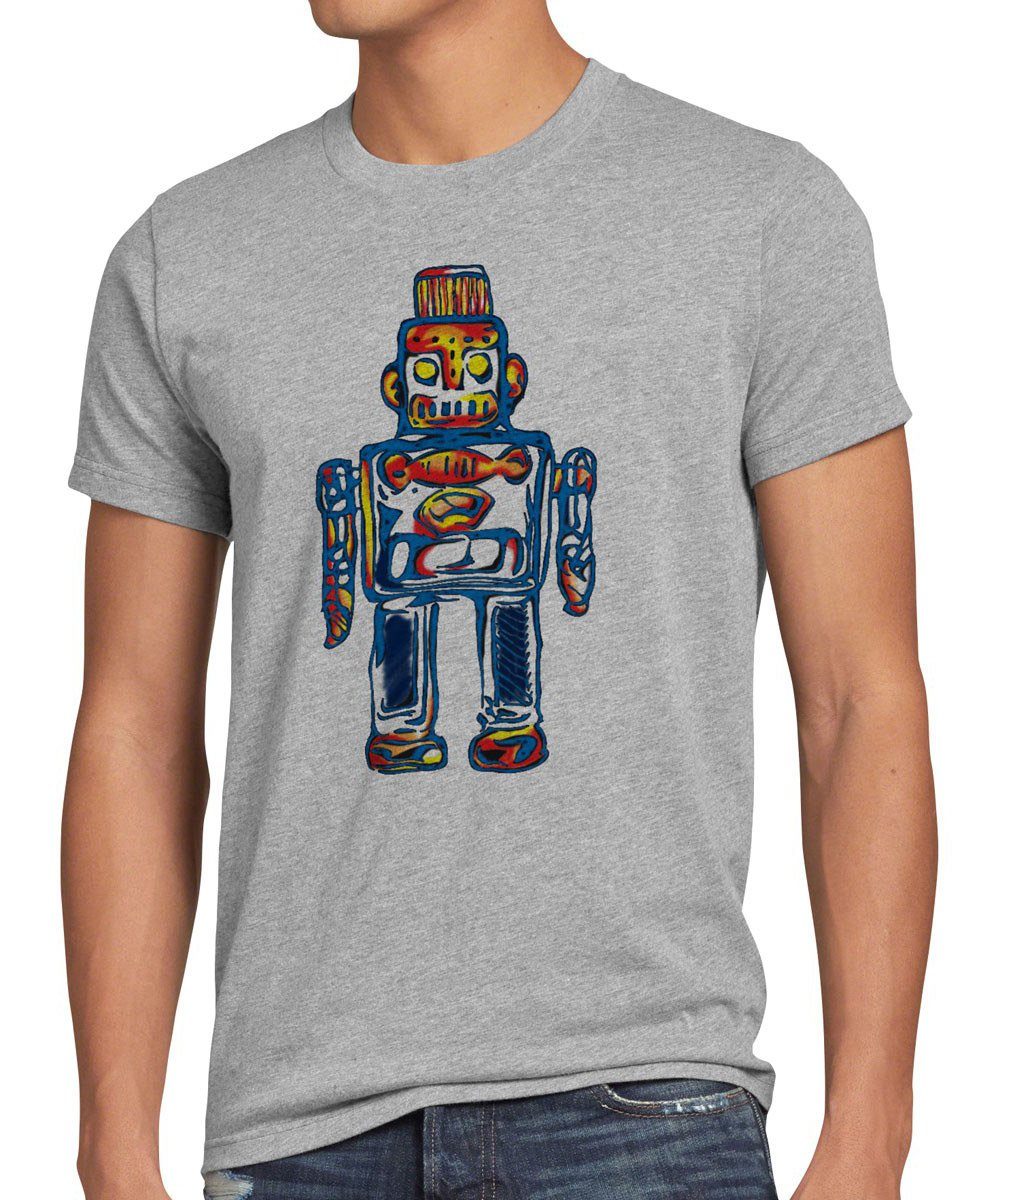 Leonard T-Shirt meliert Sheldon Herren style3 tbbt Print-Shirt Roboter bang grau big cooper spielzeug Toy Robot